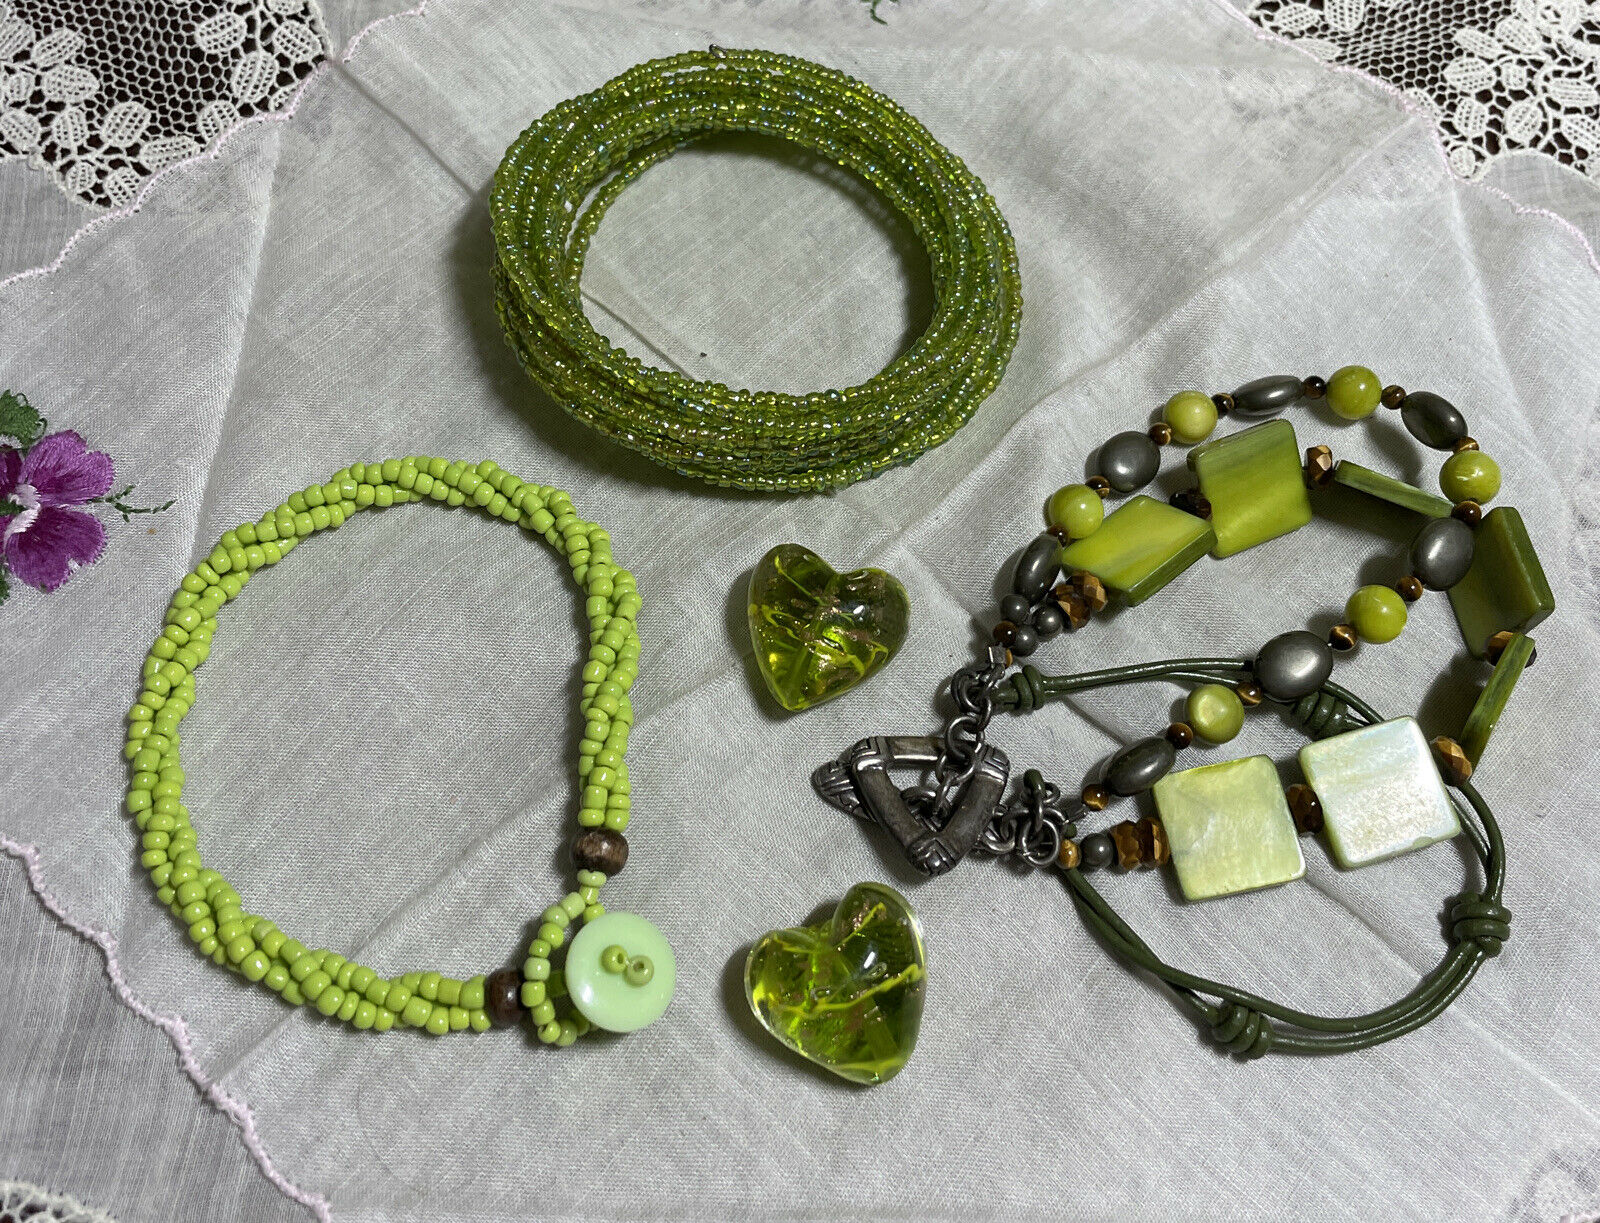 Crafting Create Green Seed Shell Bead Bracelets Mop Heart Beads Crf4-11